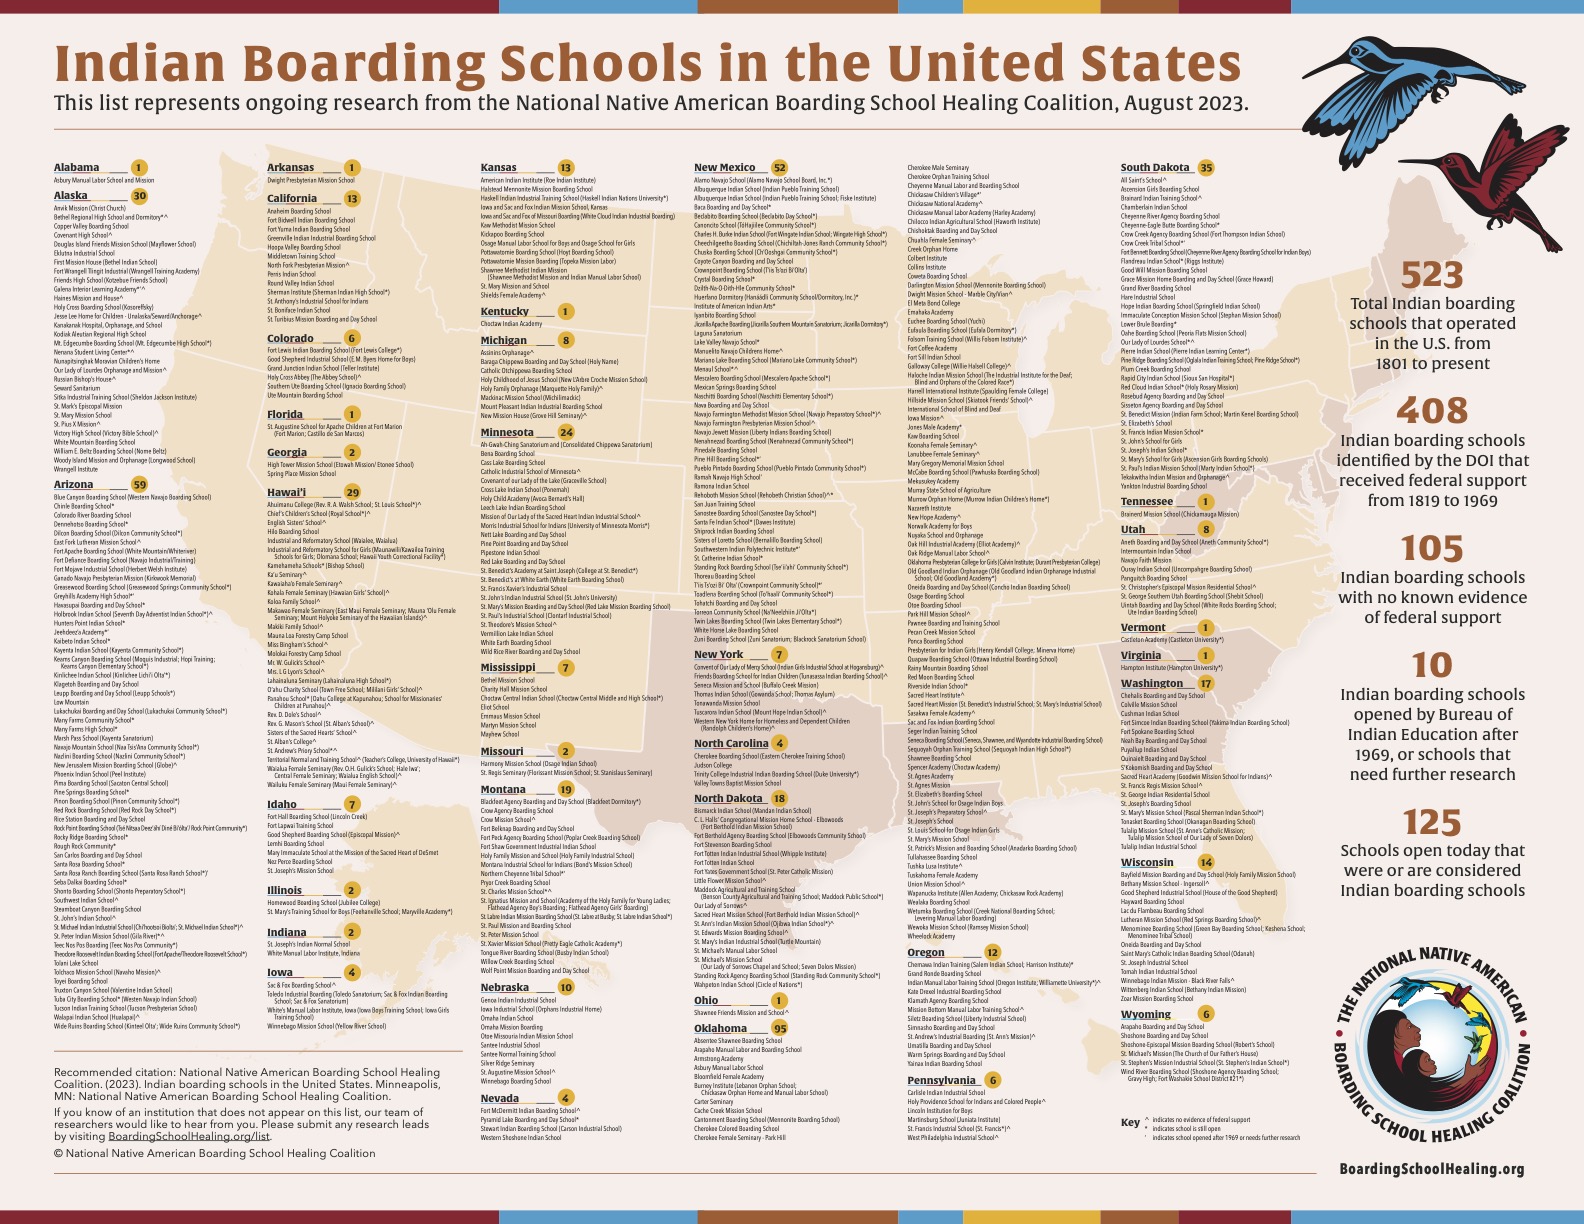 National Native American Boarding School Healing Coalition_List of Indian boarding schools in US_August 2023